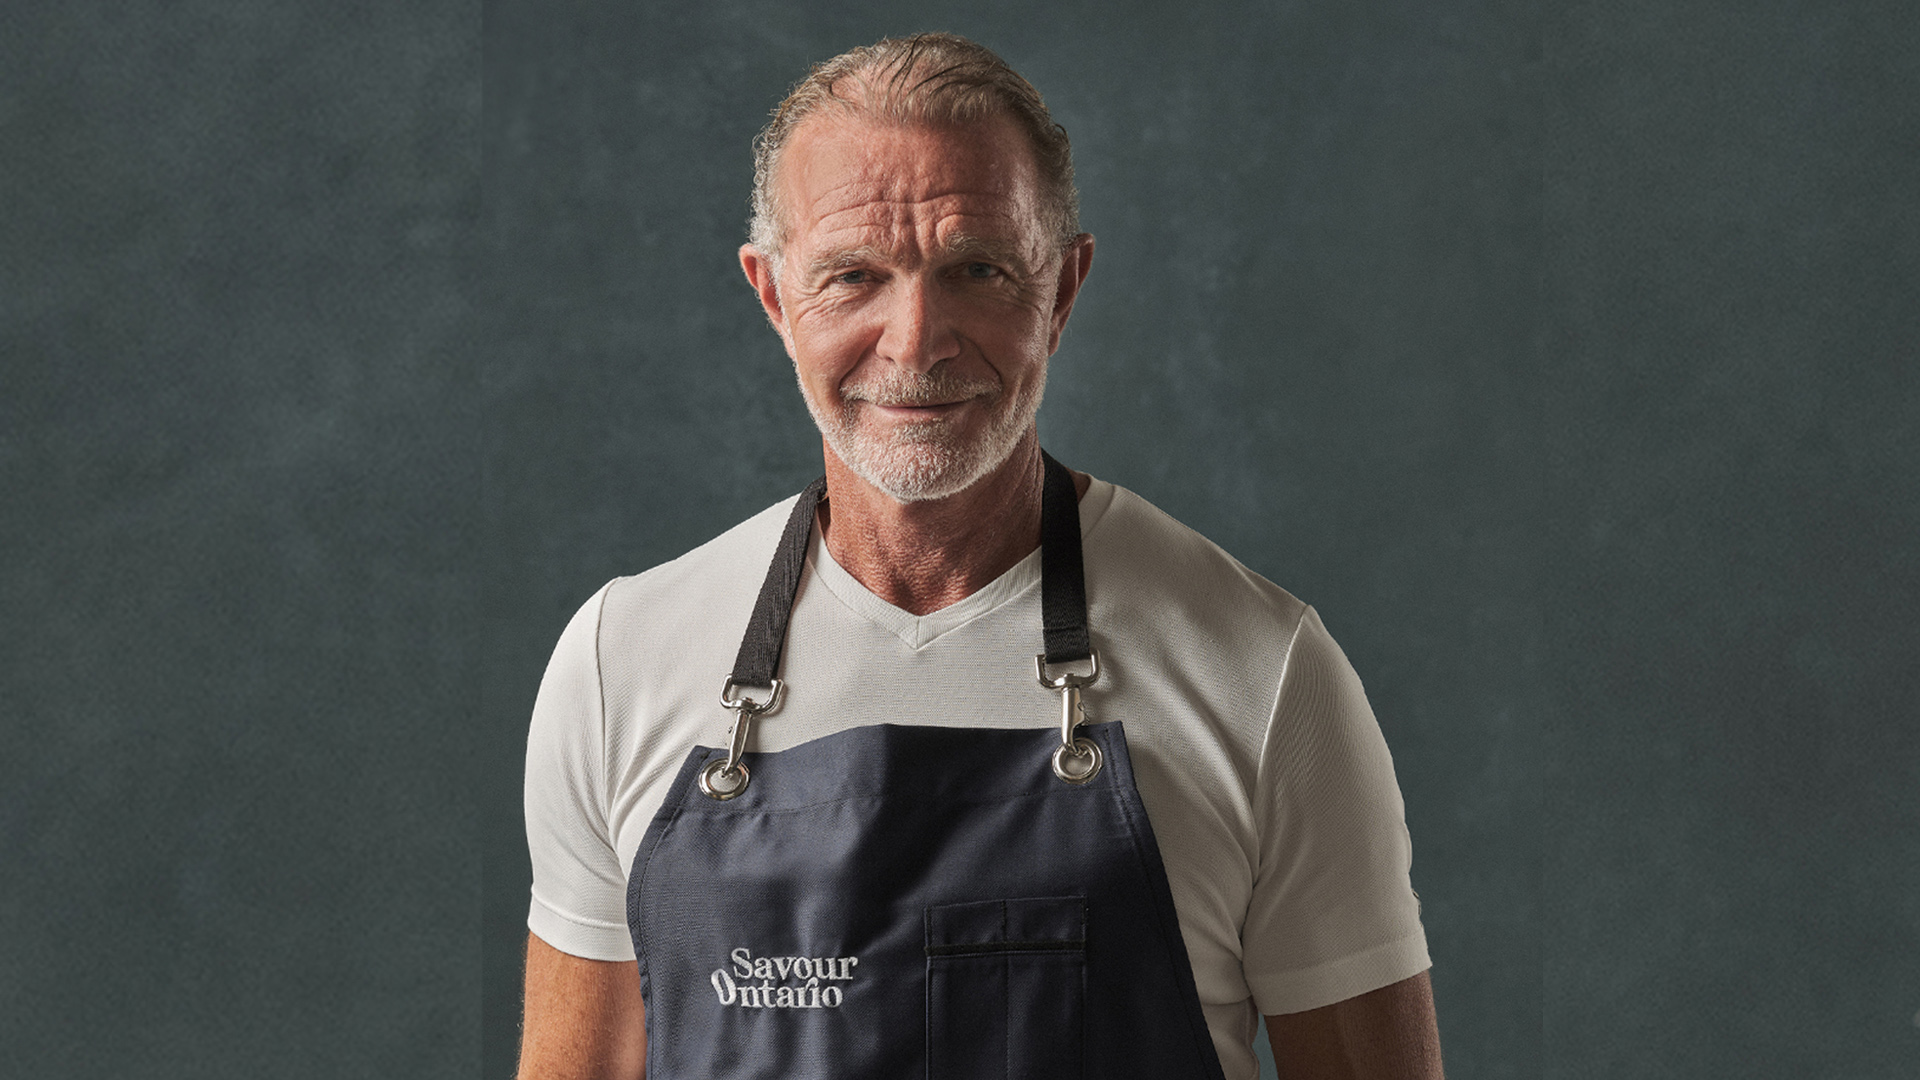 A headshot of Chef Mark McEwan wearing a short sleeved white t-shirt underneath a navy Savour Ontario apron.